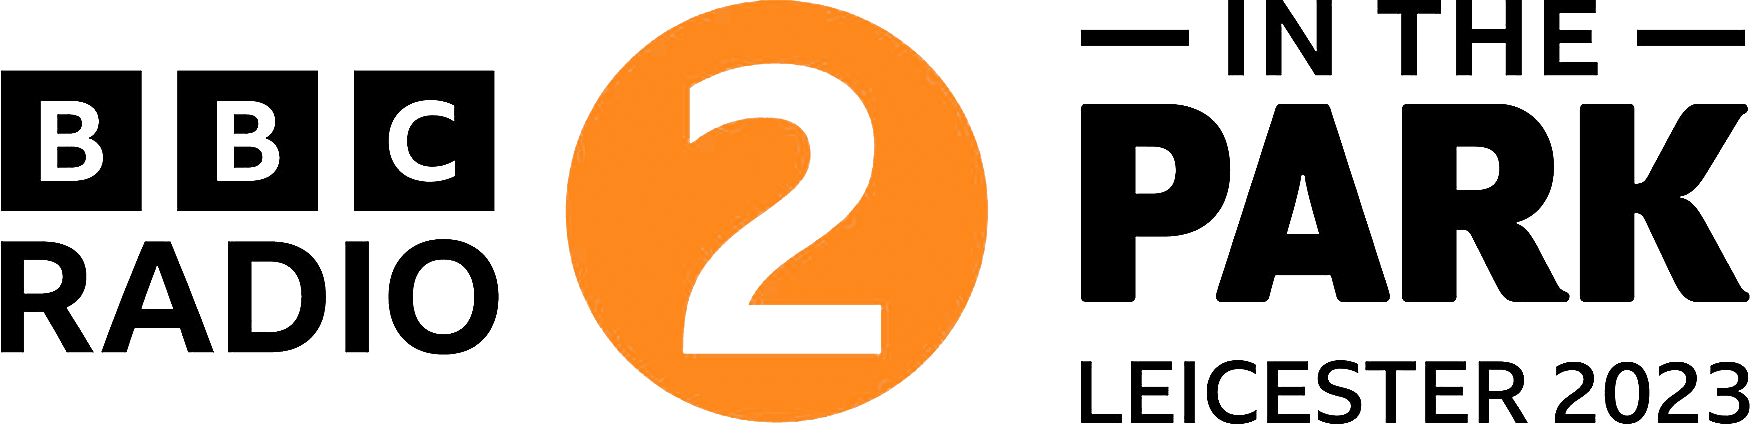 Rick Astley: Radio 2 in the Park logo